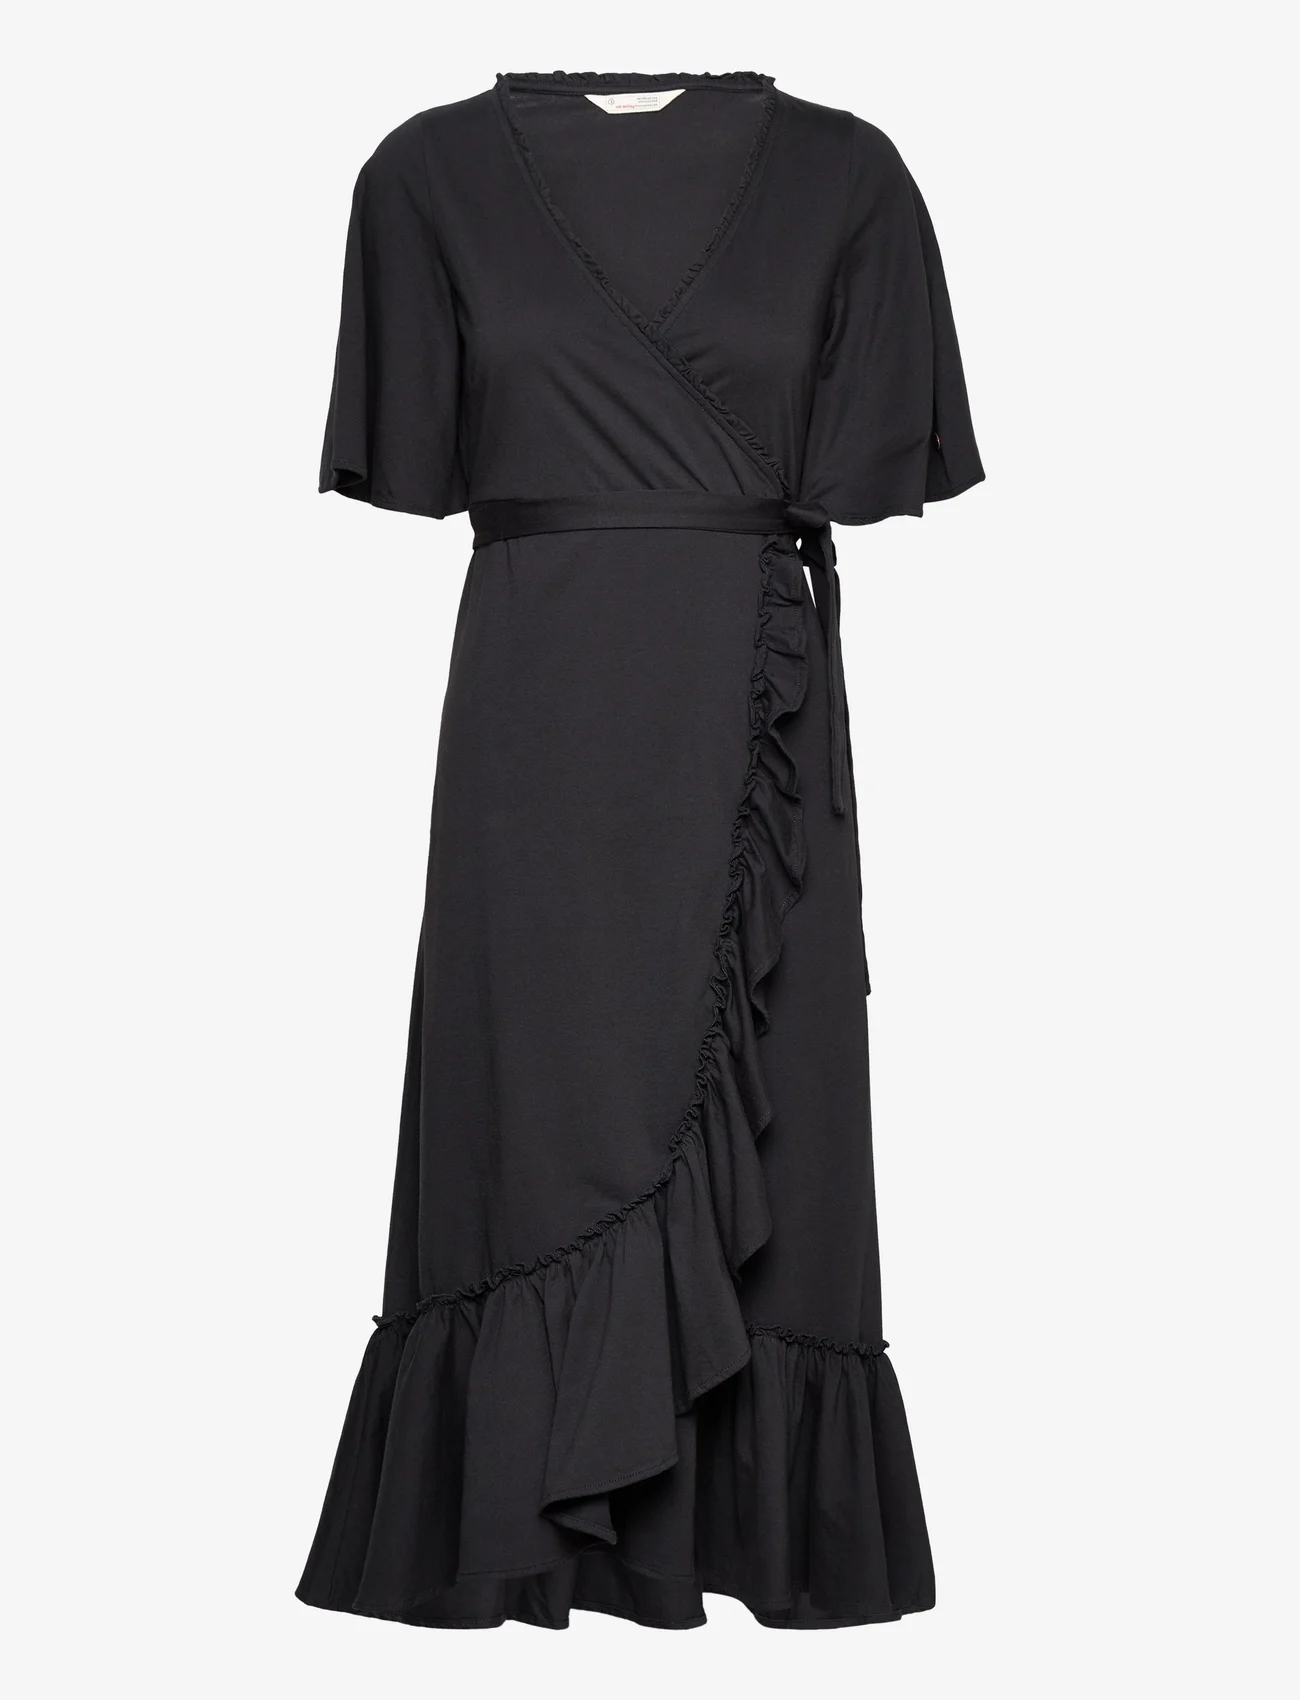 ODD MOLLY - Gracie Dress - midi jurken - almost black - 0